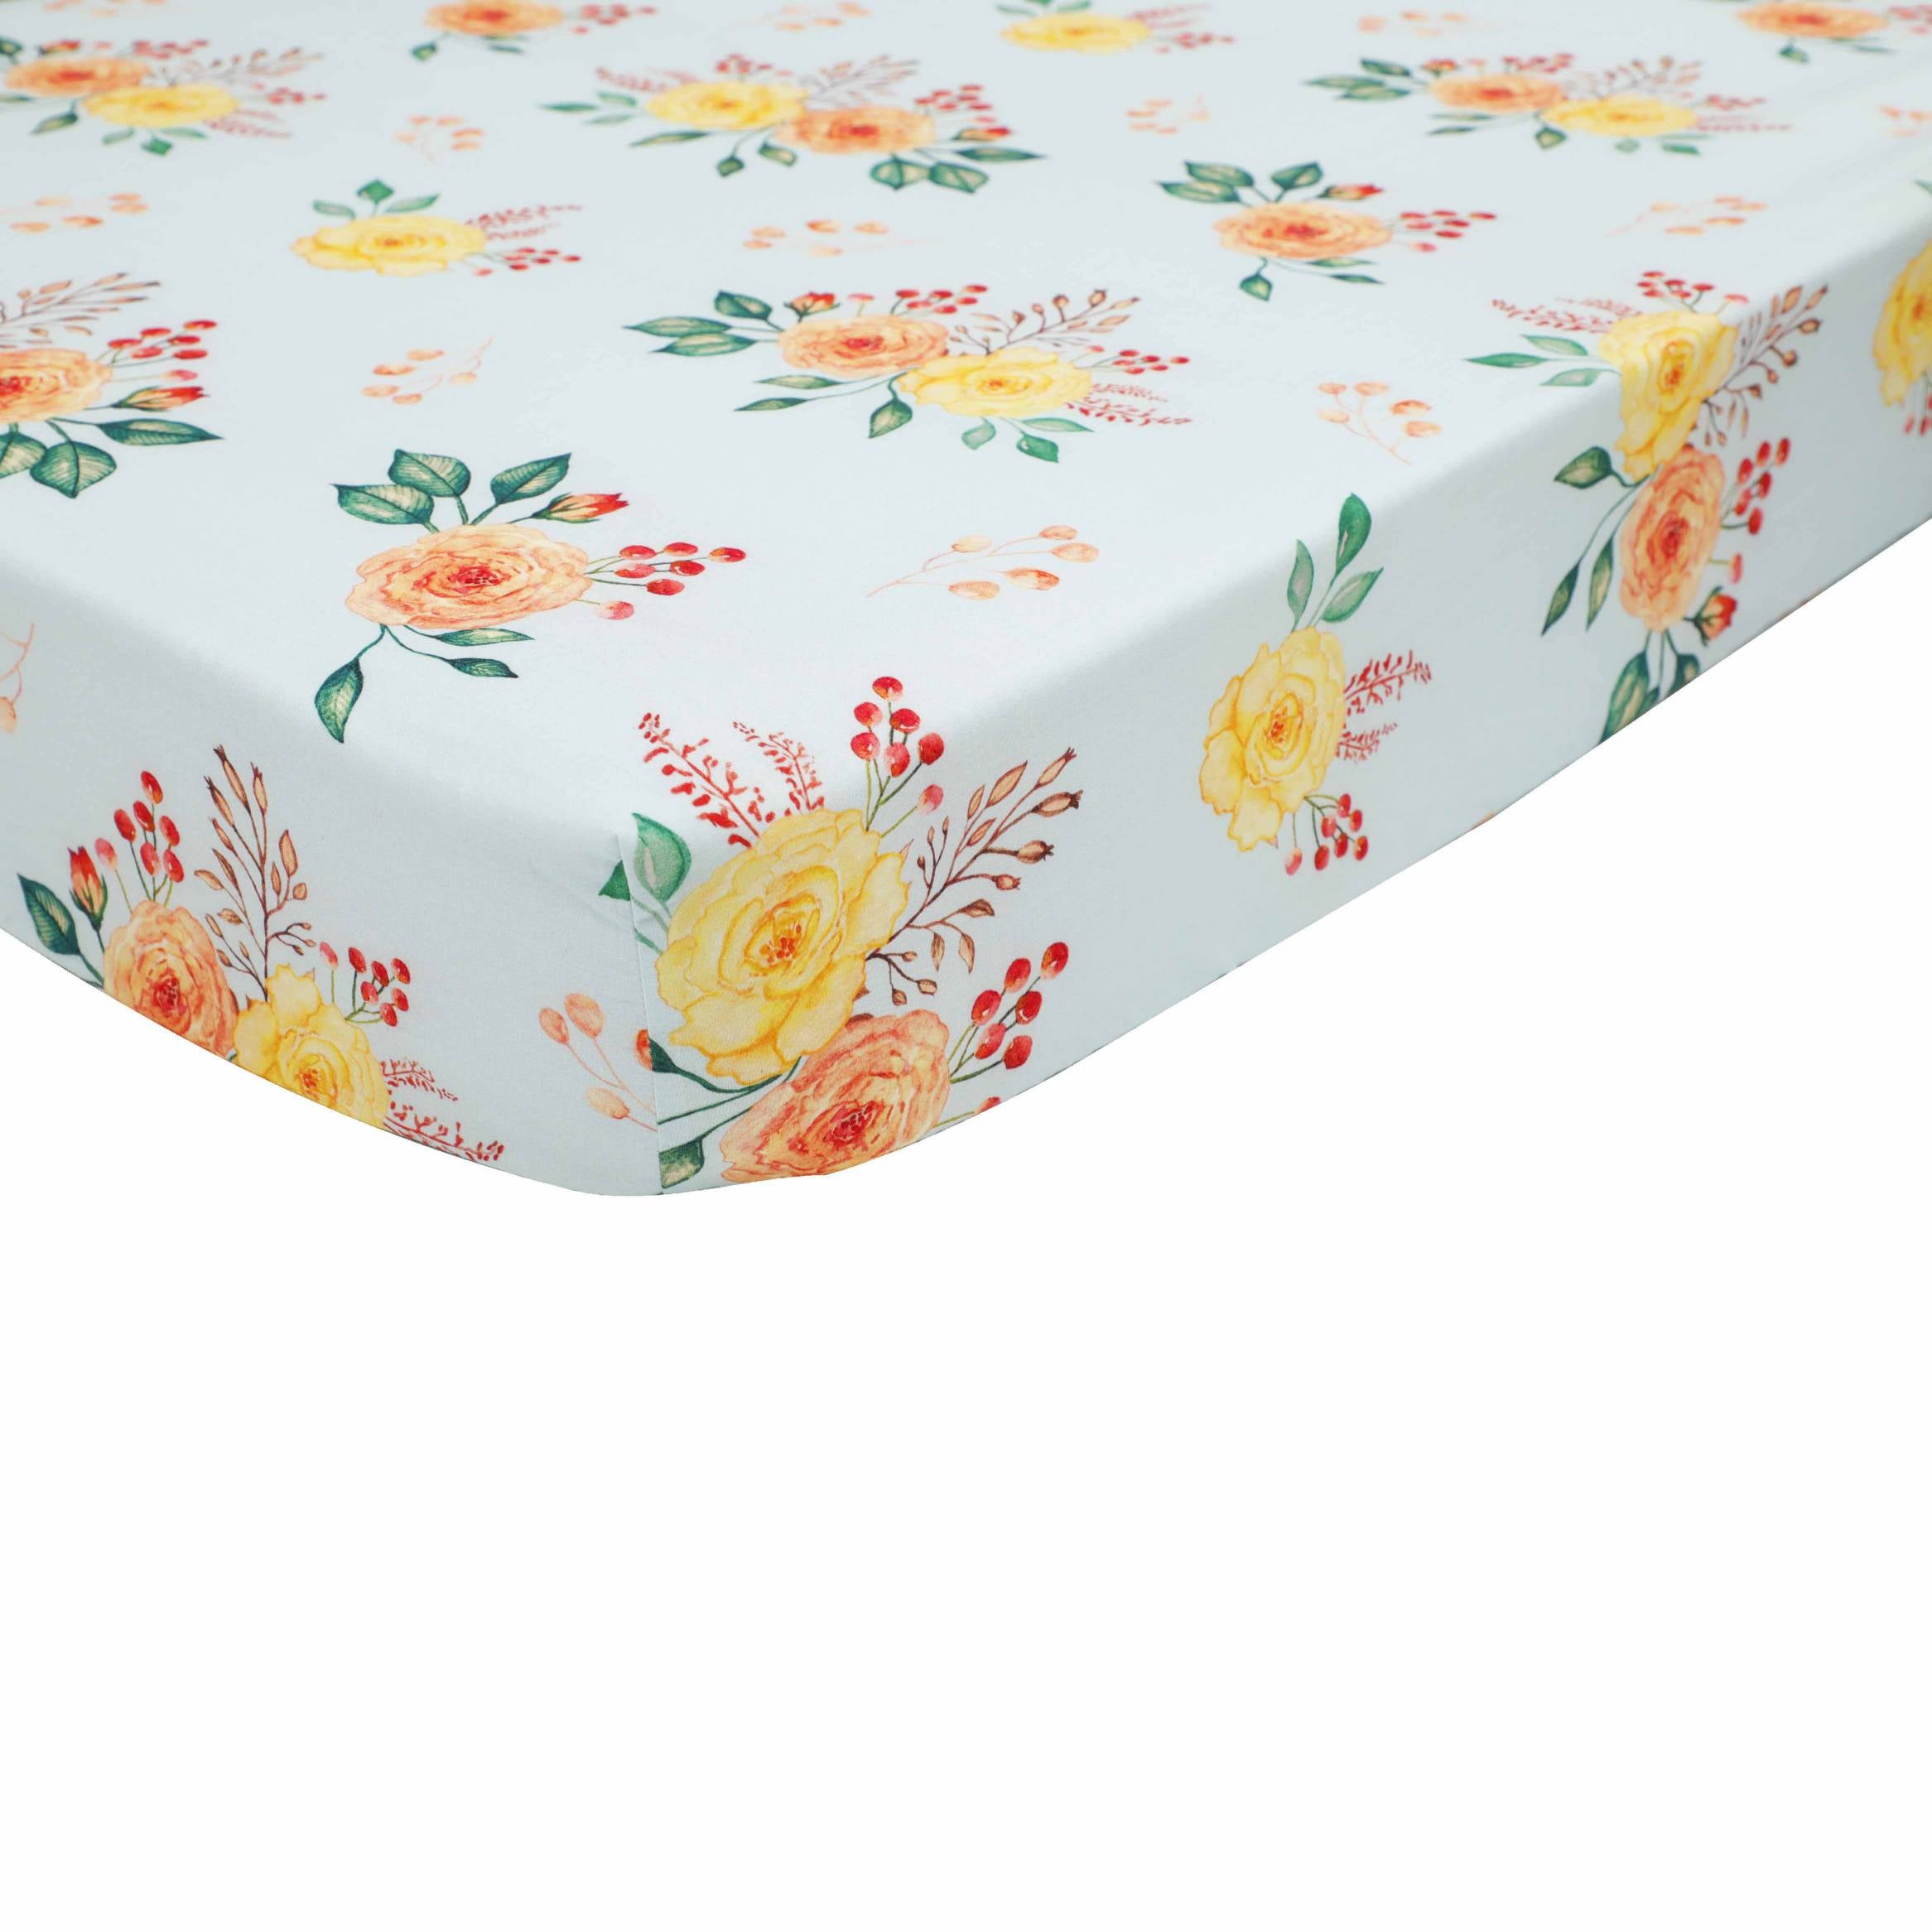 Blossom & Polka - Cot Bedding Set with Bumper